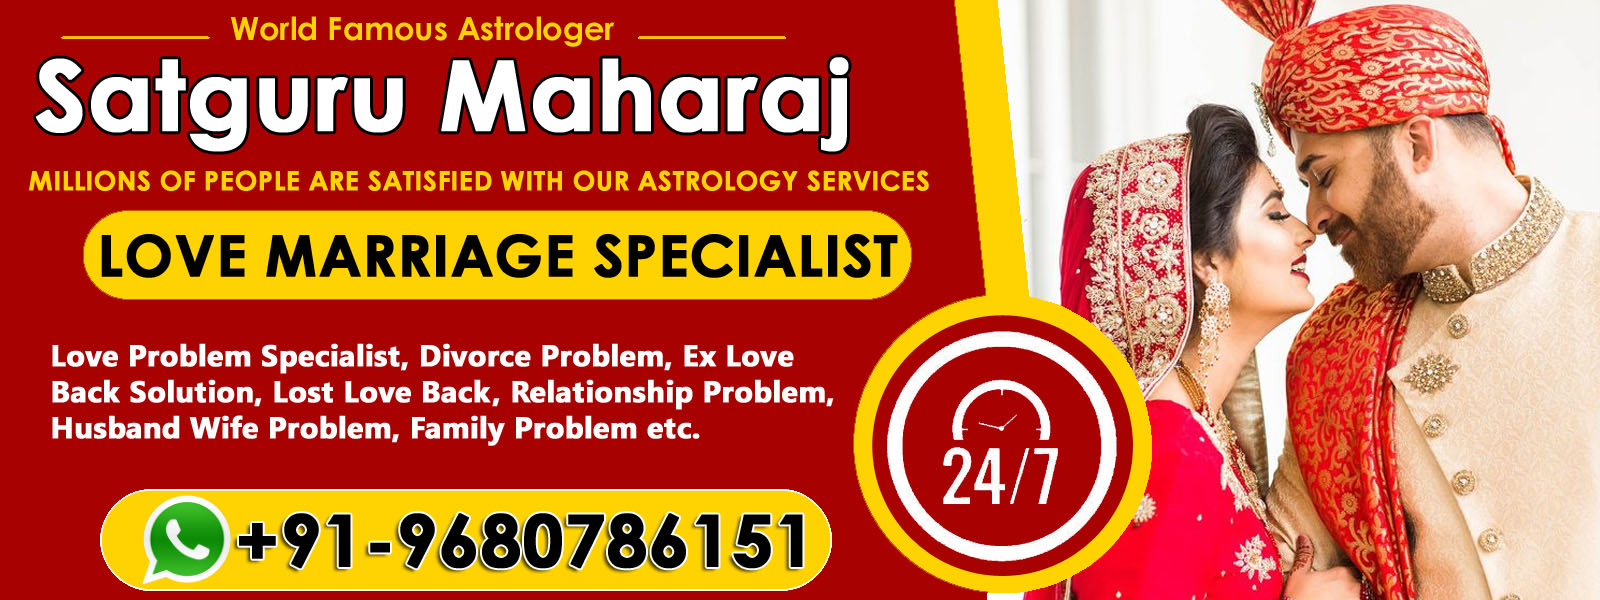 World Famous Astrologer Satguru Maharaj Ji +91-9680786151